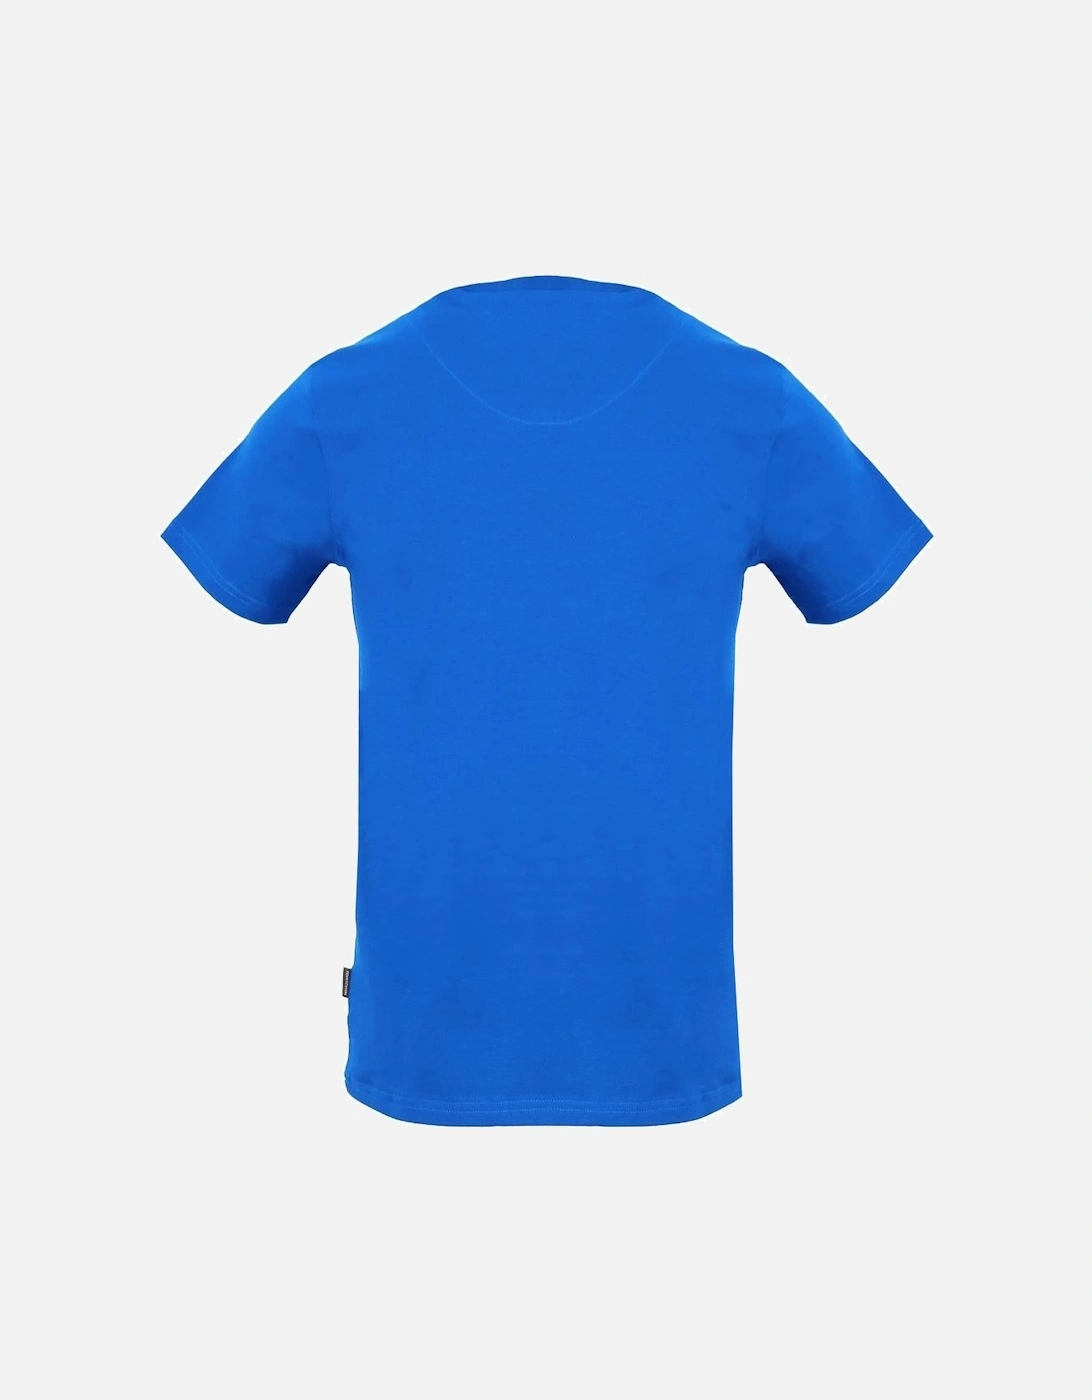 Bold London Logo Blue T-Shirt